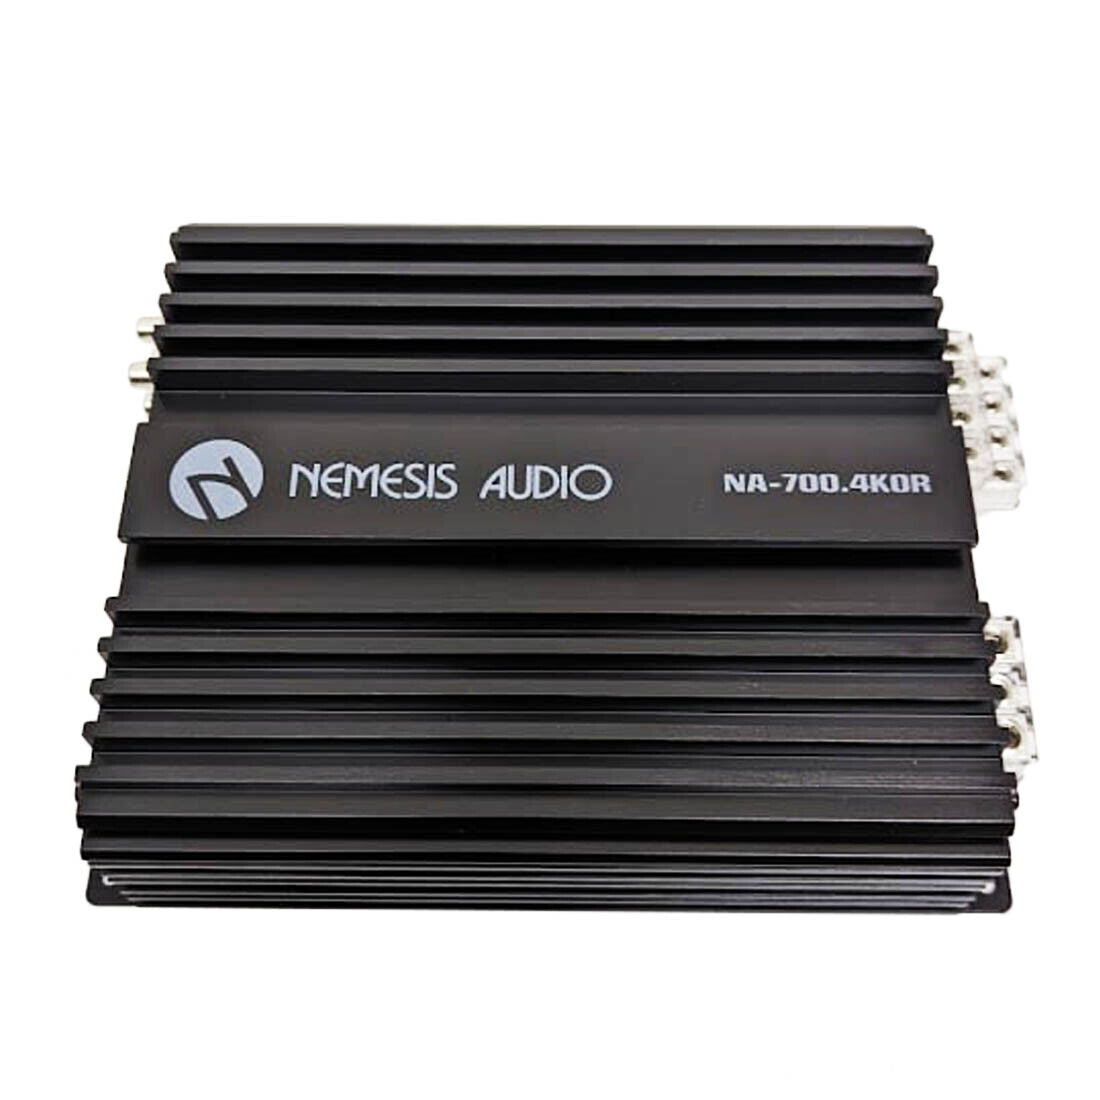 Nemesis Audio NA-700.4KOR 700 Watts 4-Channel Car Amplifier